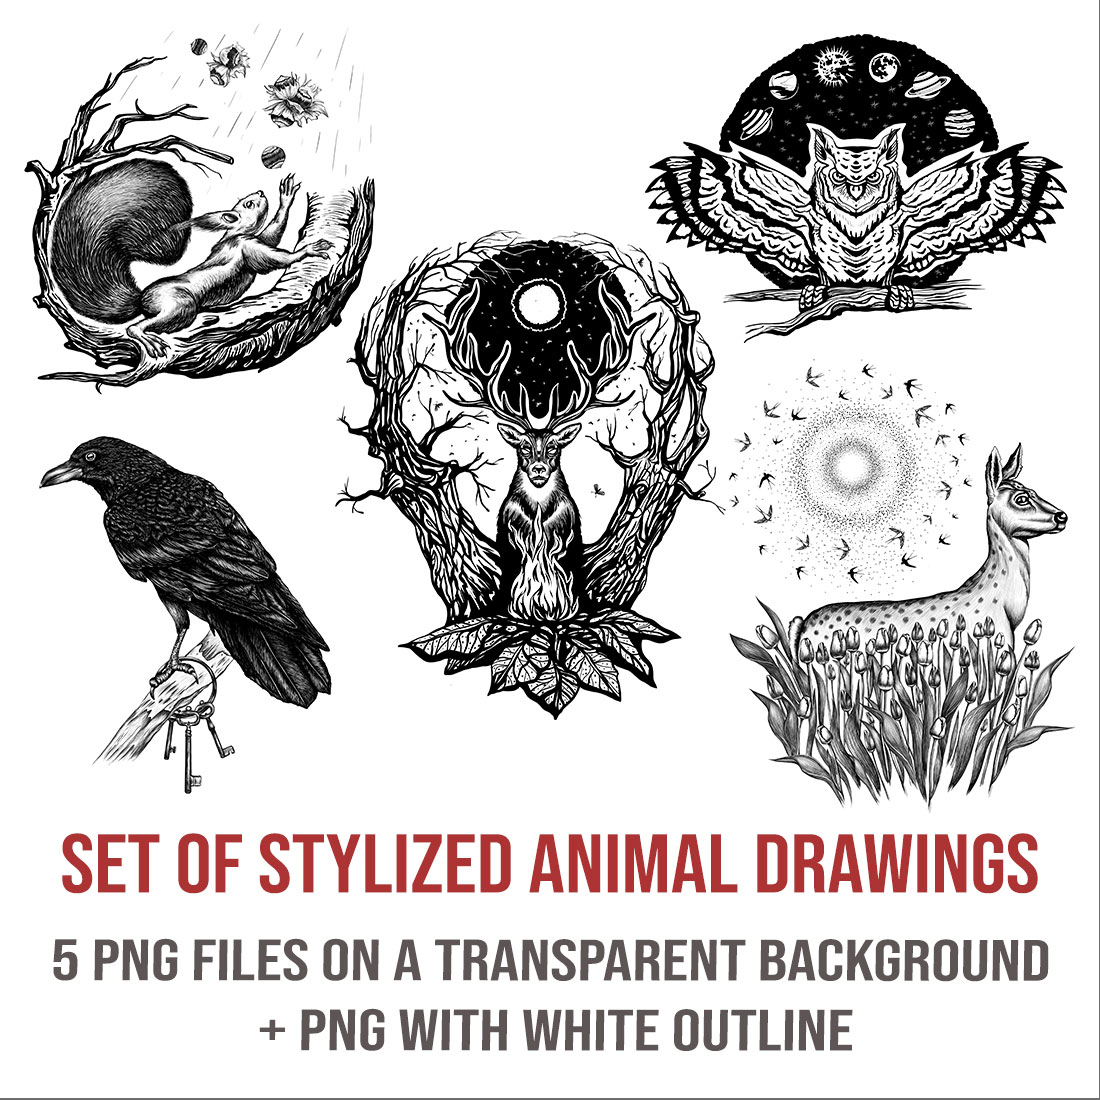 mokup set of stylized animal drawings